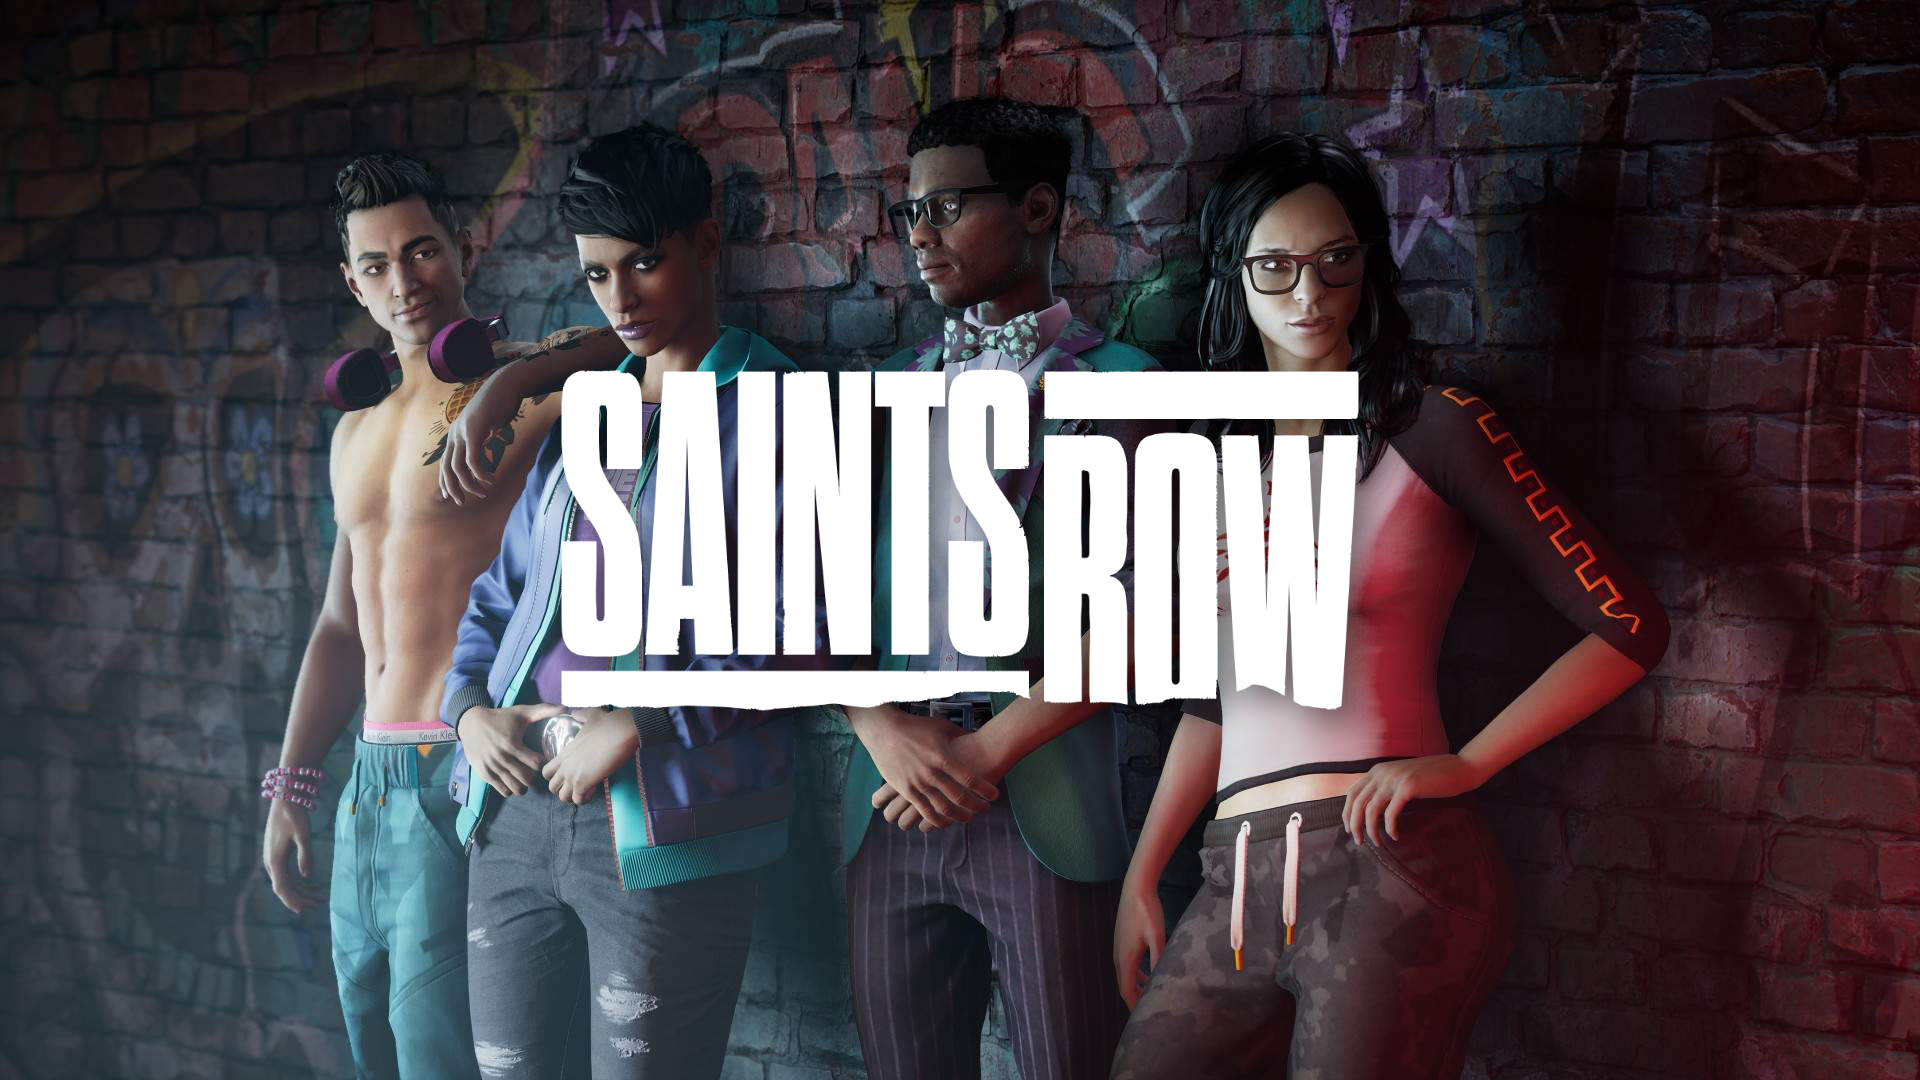 Saints Row Review - GameSpot